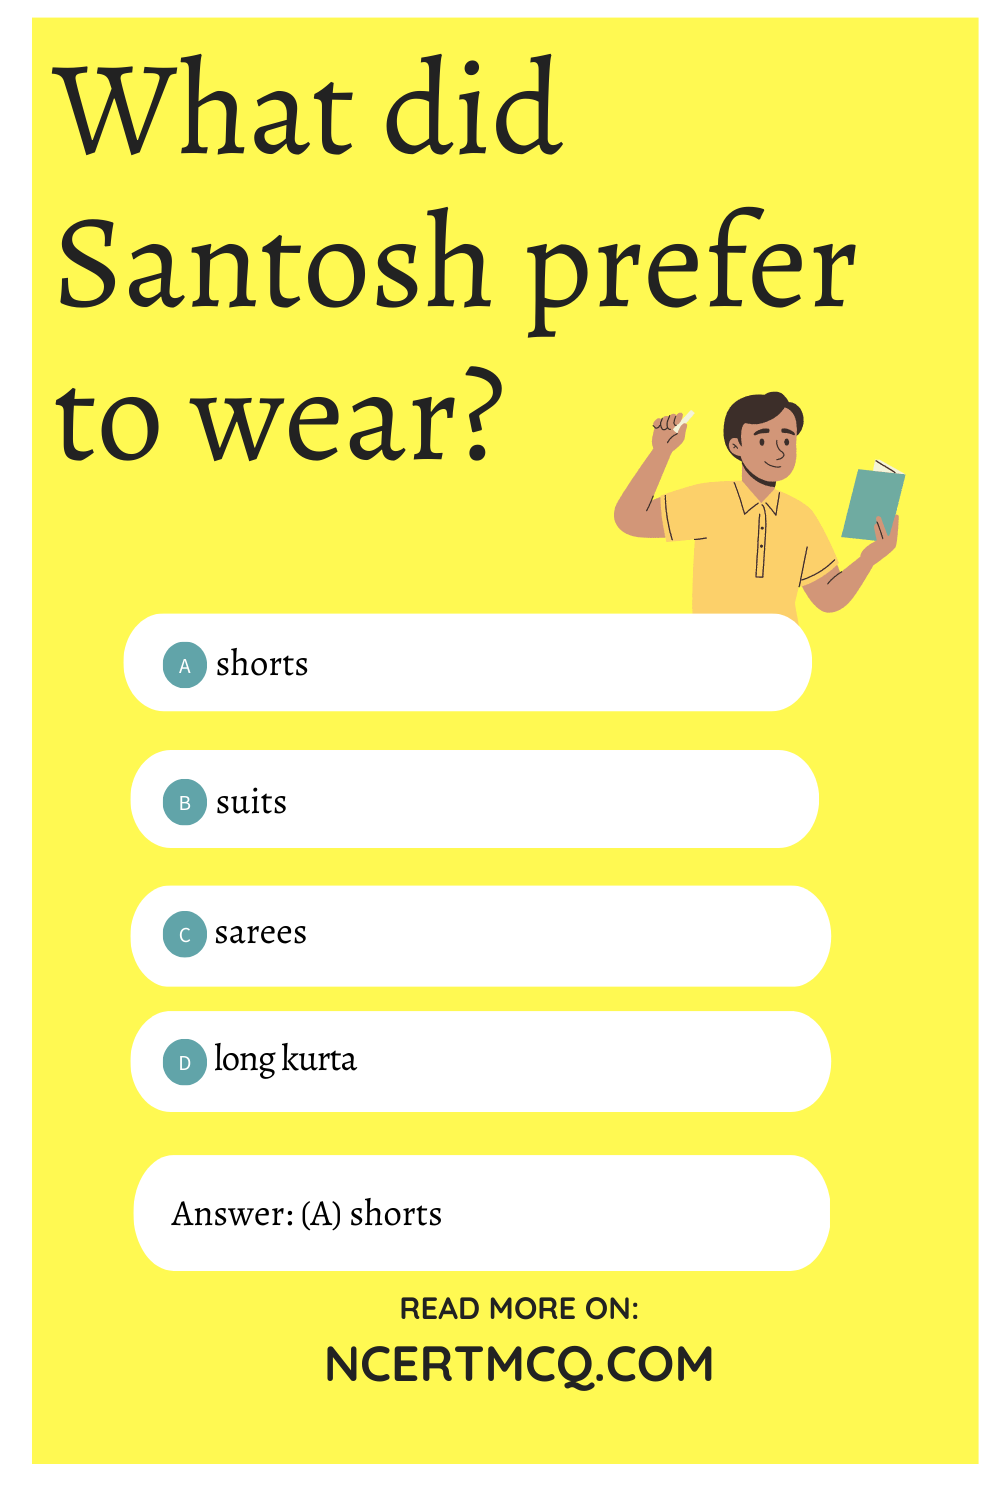 What did Santosh prefer to wear?